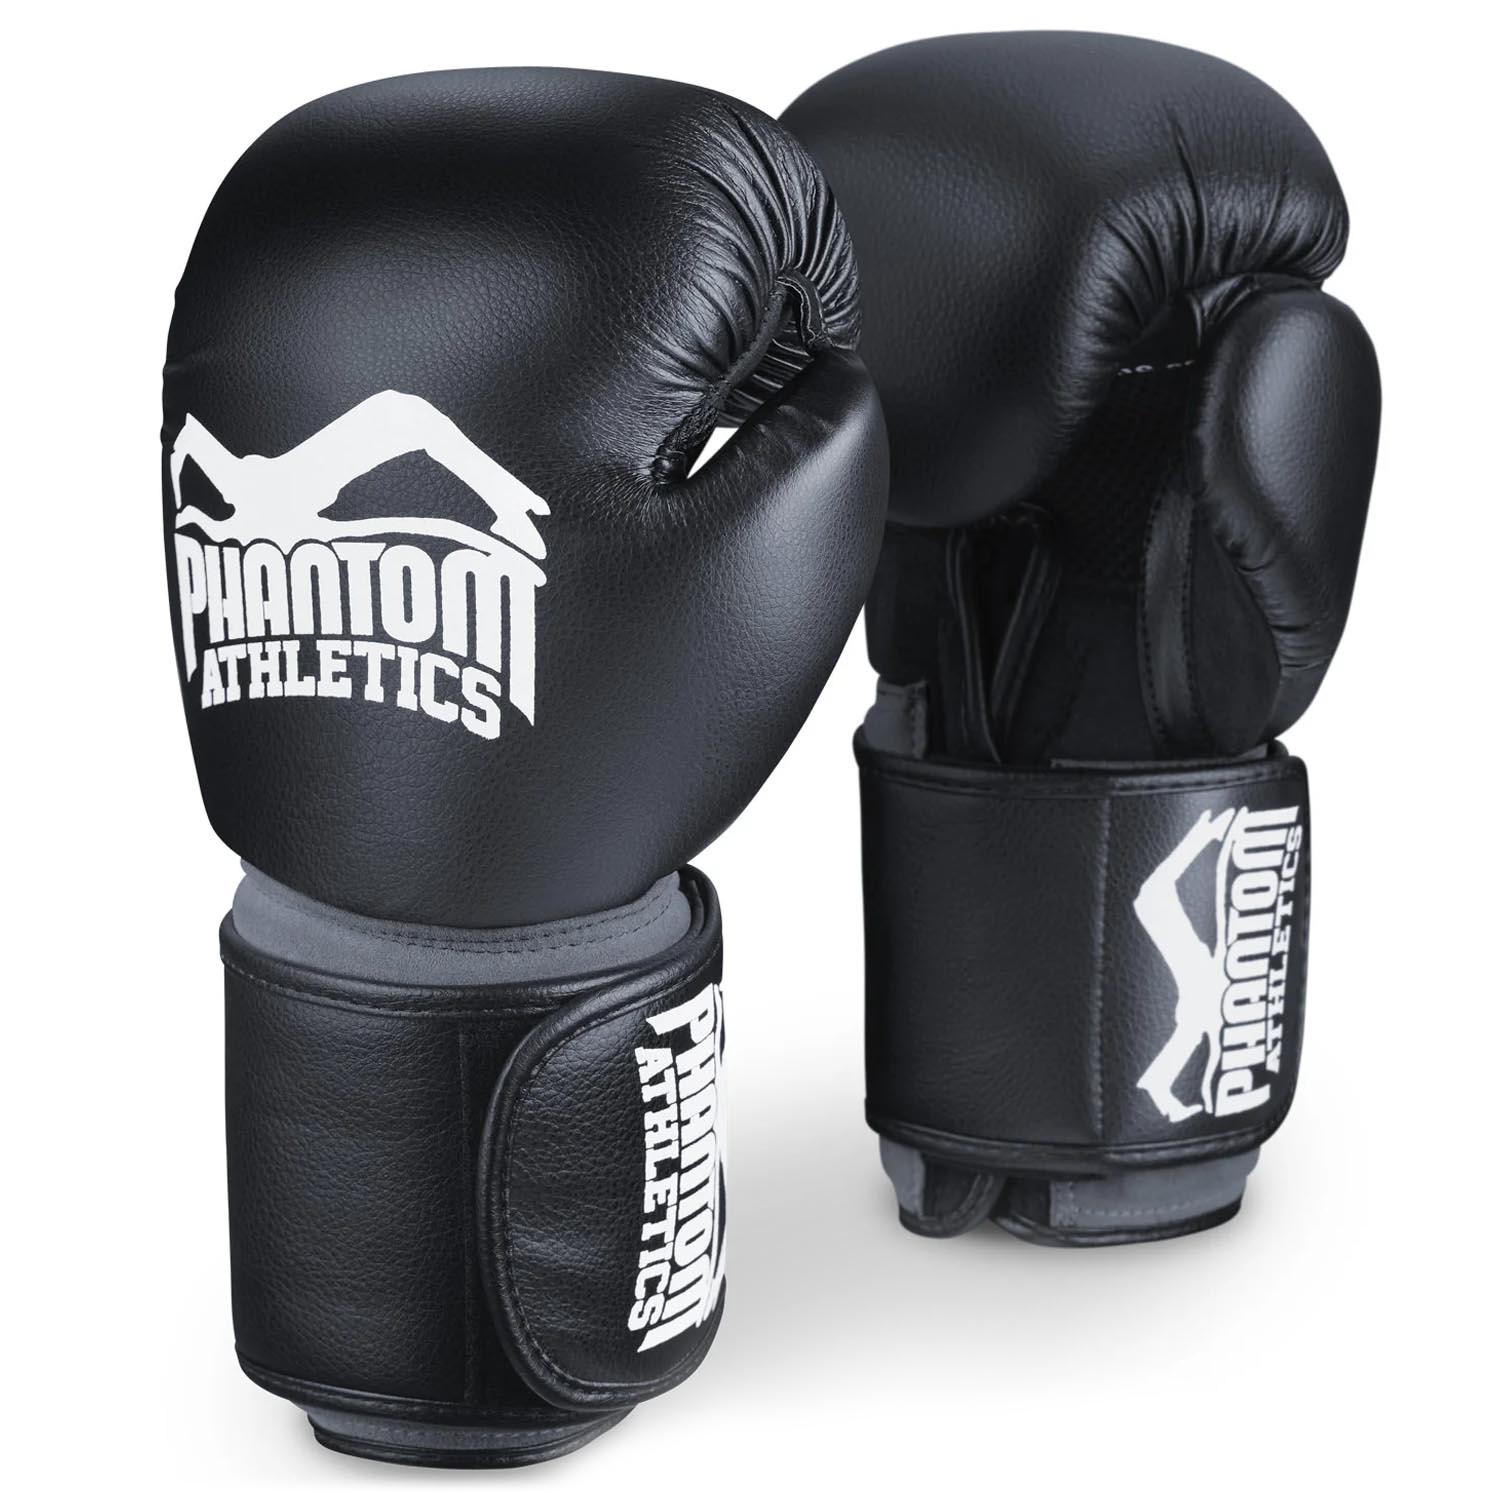 Phantom Athletics Boxing Gloves, Elite ATF, black, 10 Oz